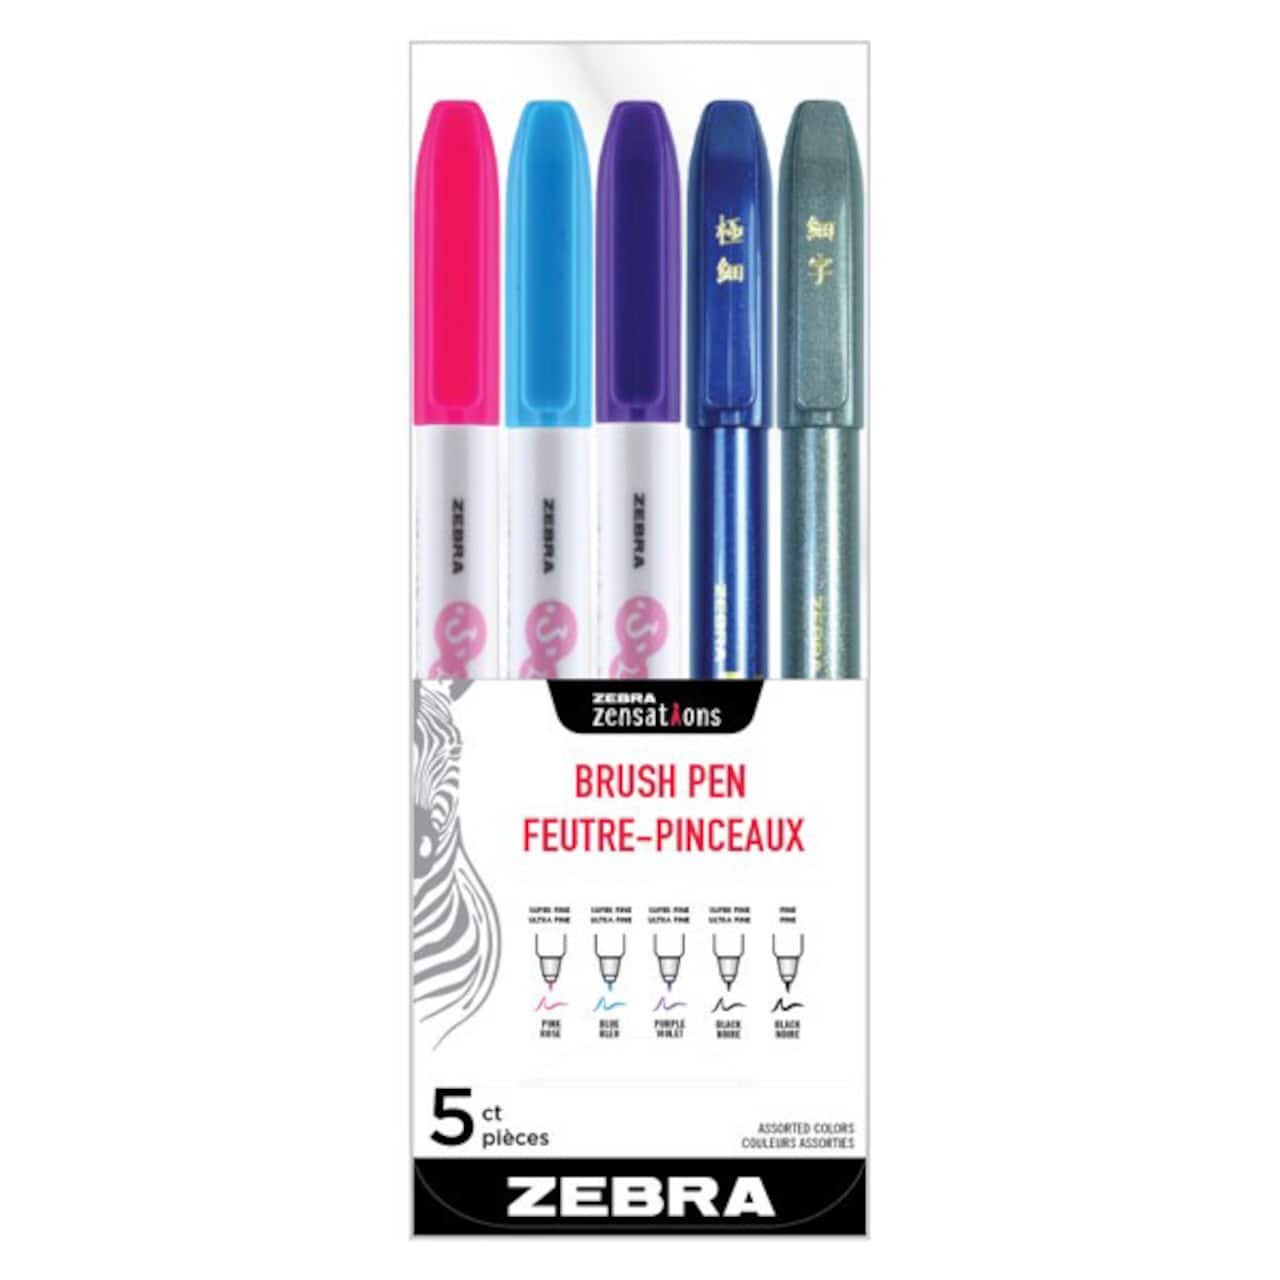 Zebra Zensations Brush Pen Set